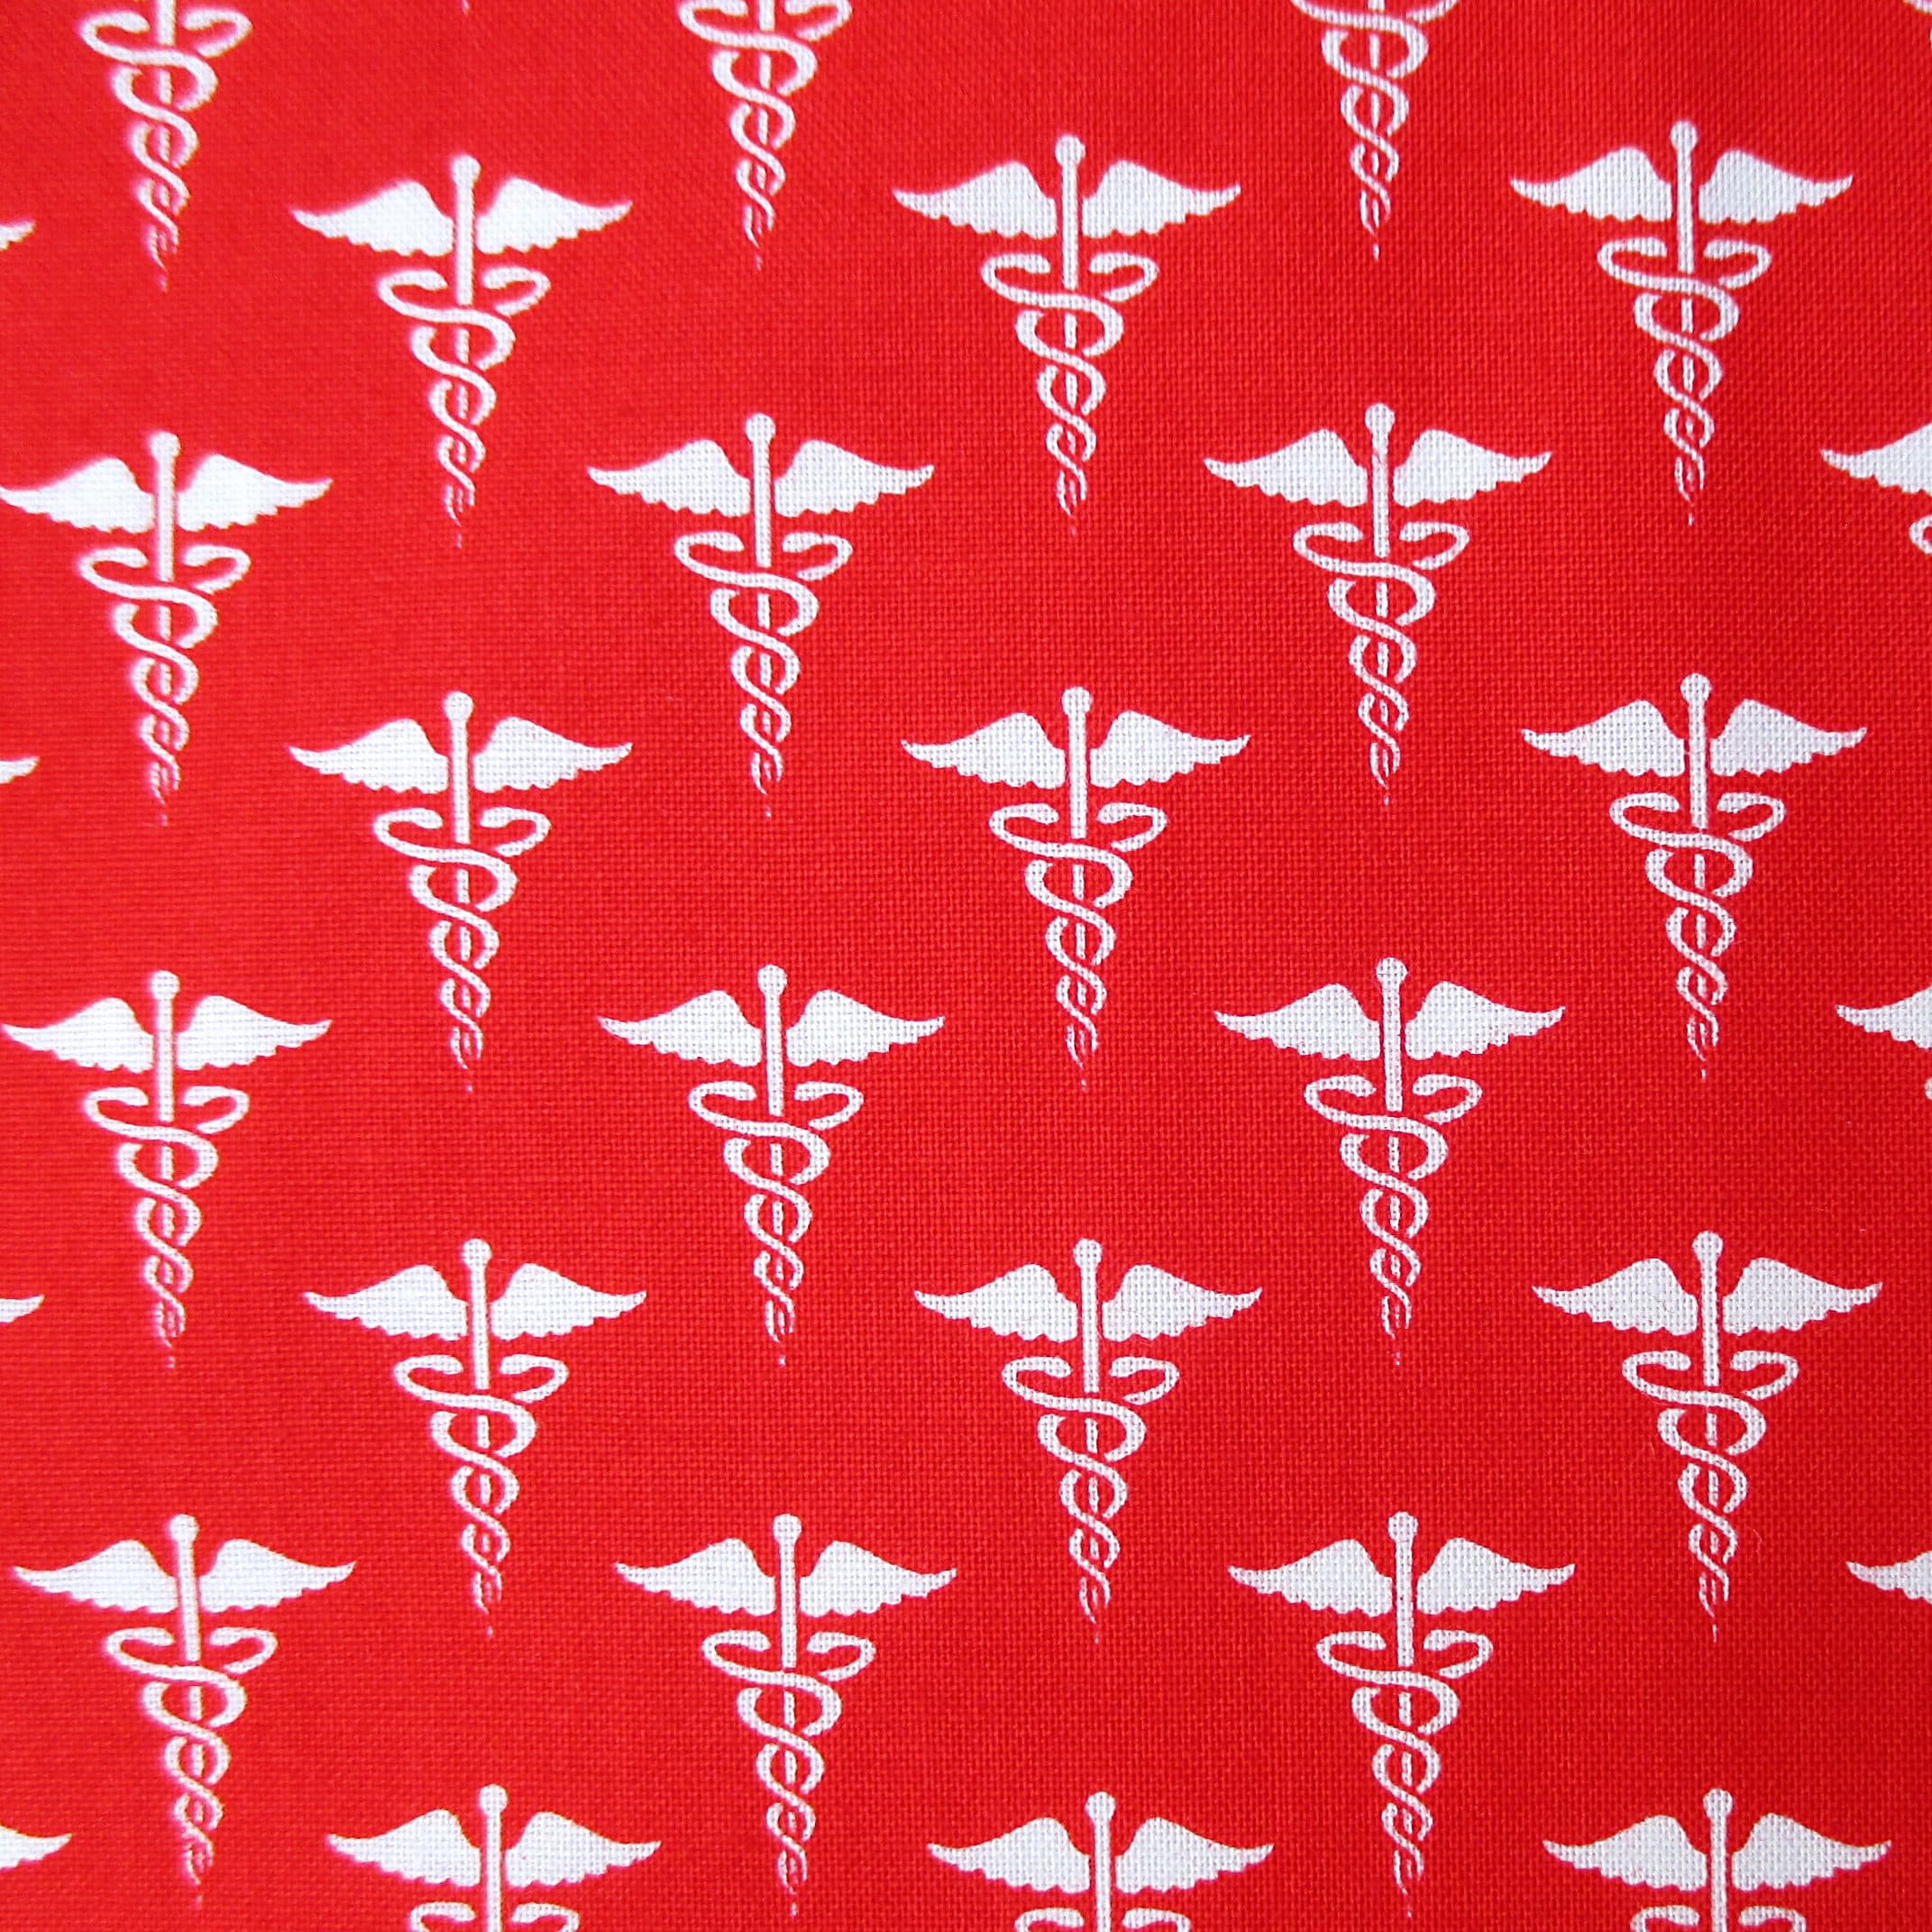 Fabric Calling All Nurses Caduceus on Red Medical Symbol
 Red Nursing Caduceus